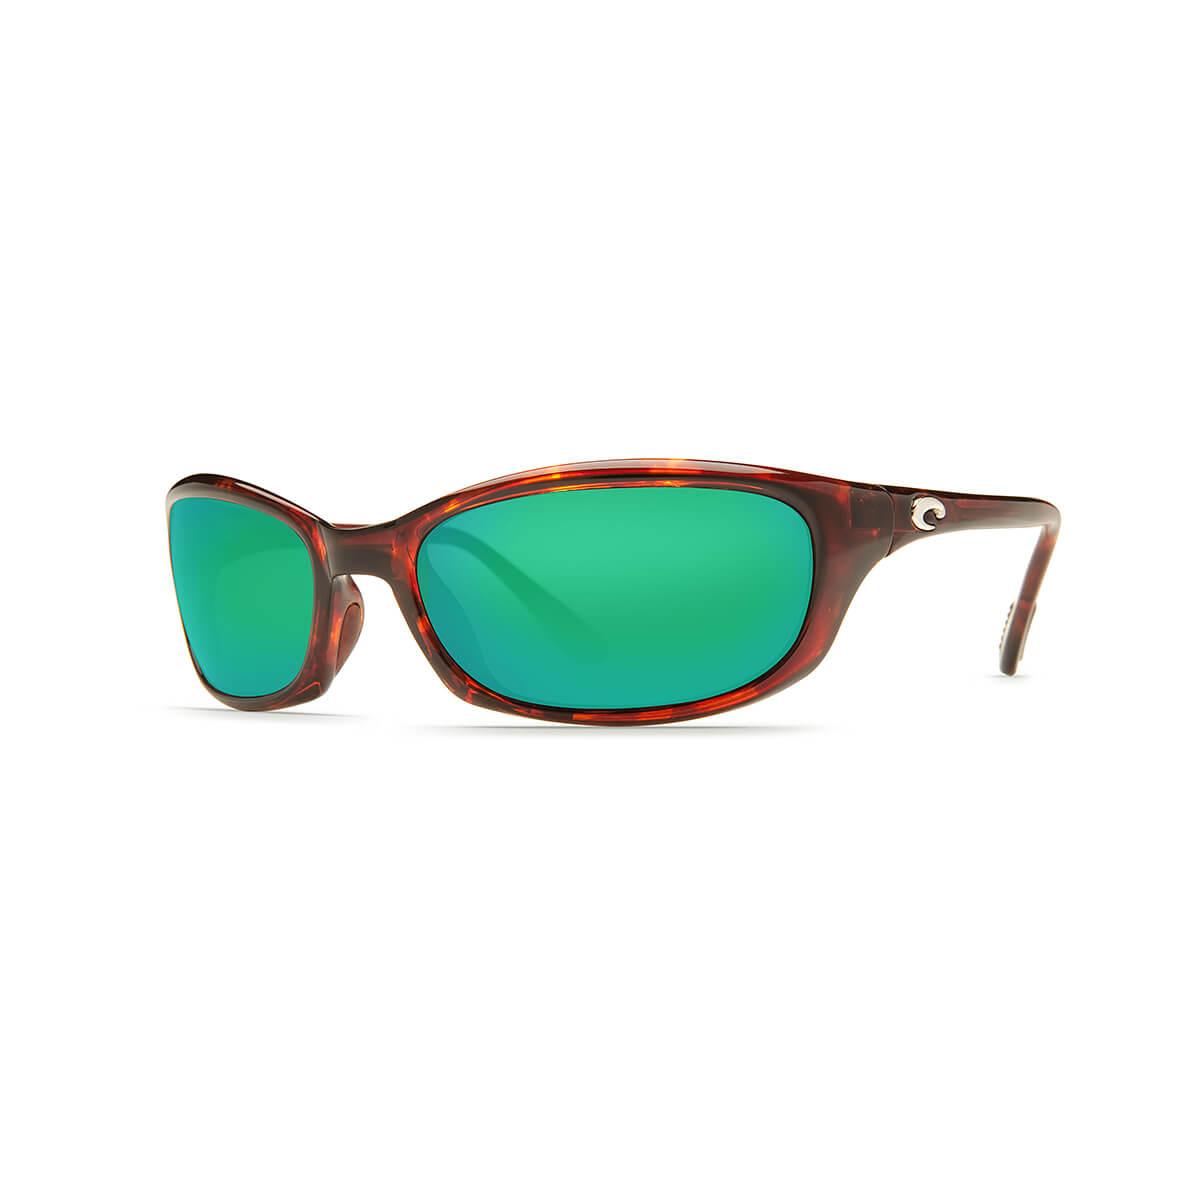  Harpoon 580p Sunglasses - Polarized Plastic